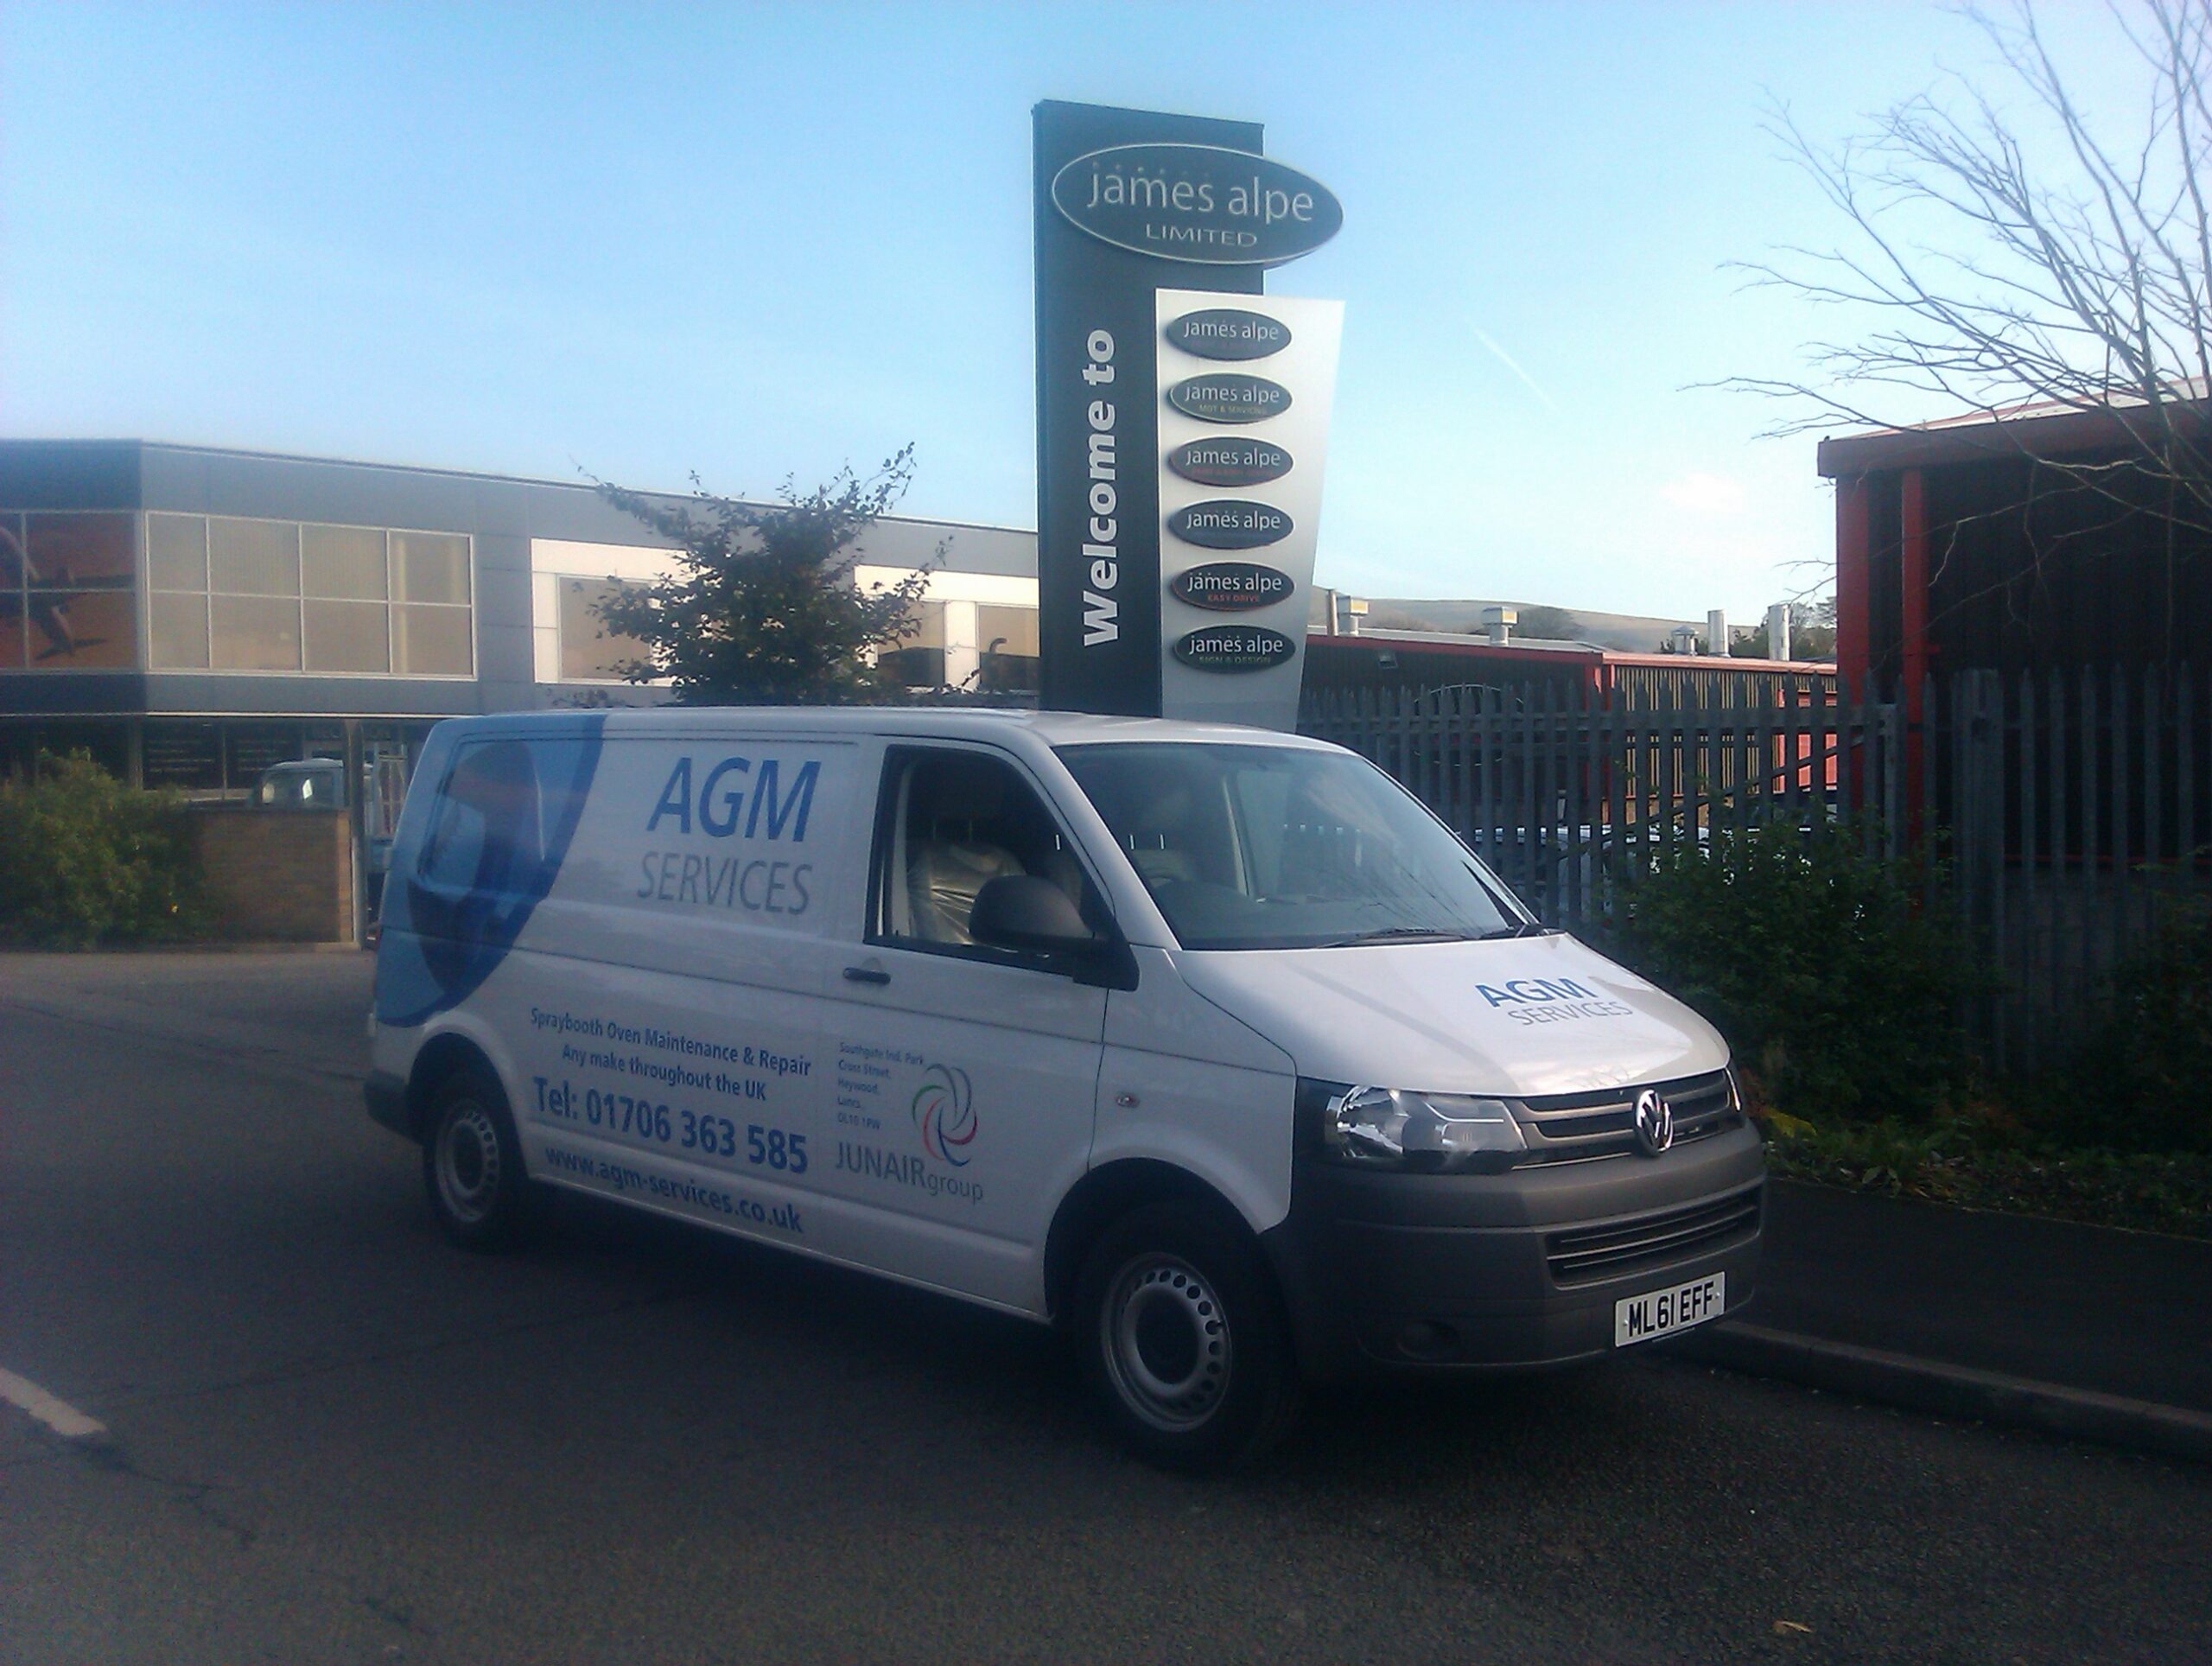 AGM Services